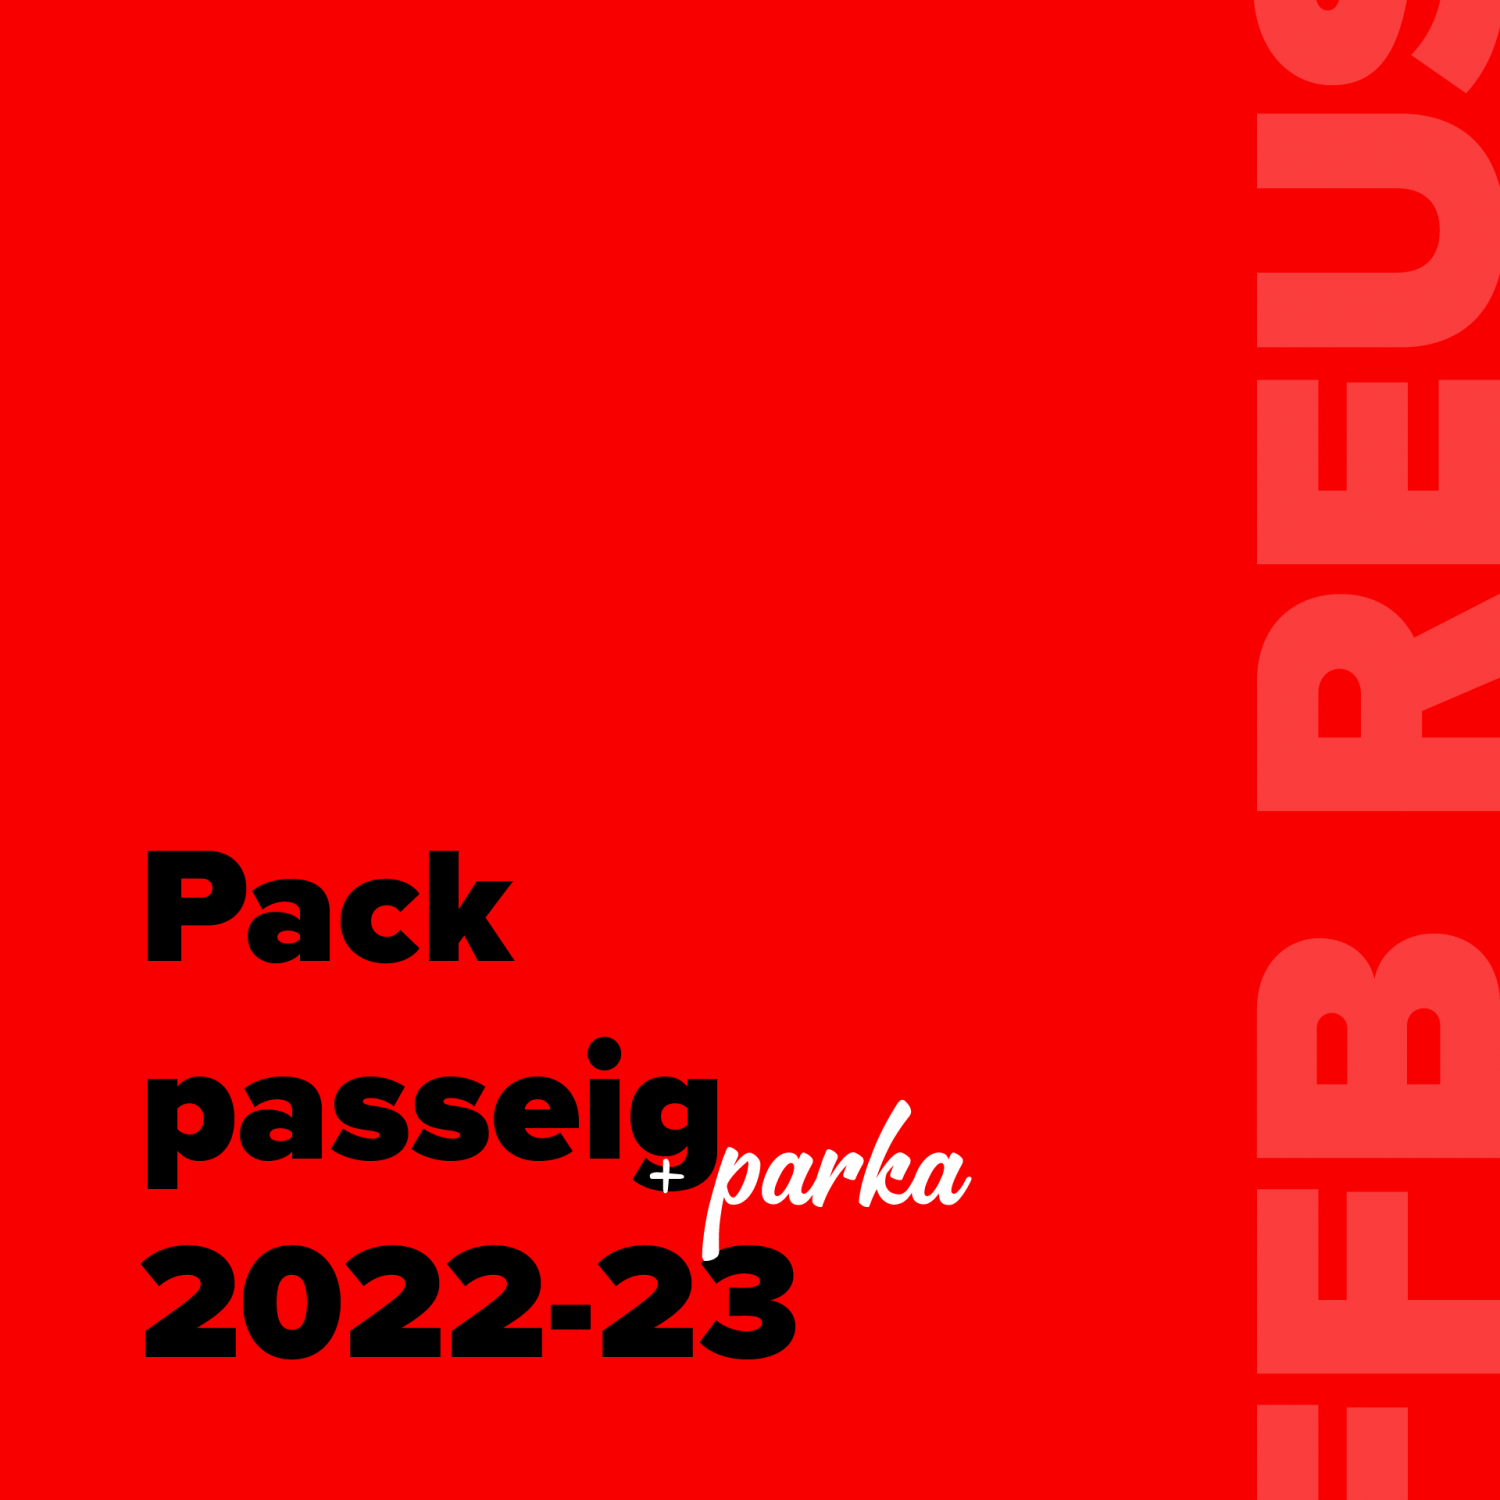 Pack passeig amb parka 22-23 FFB Reus